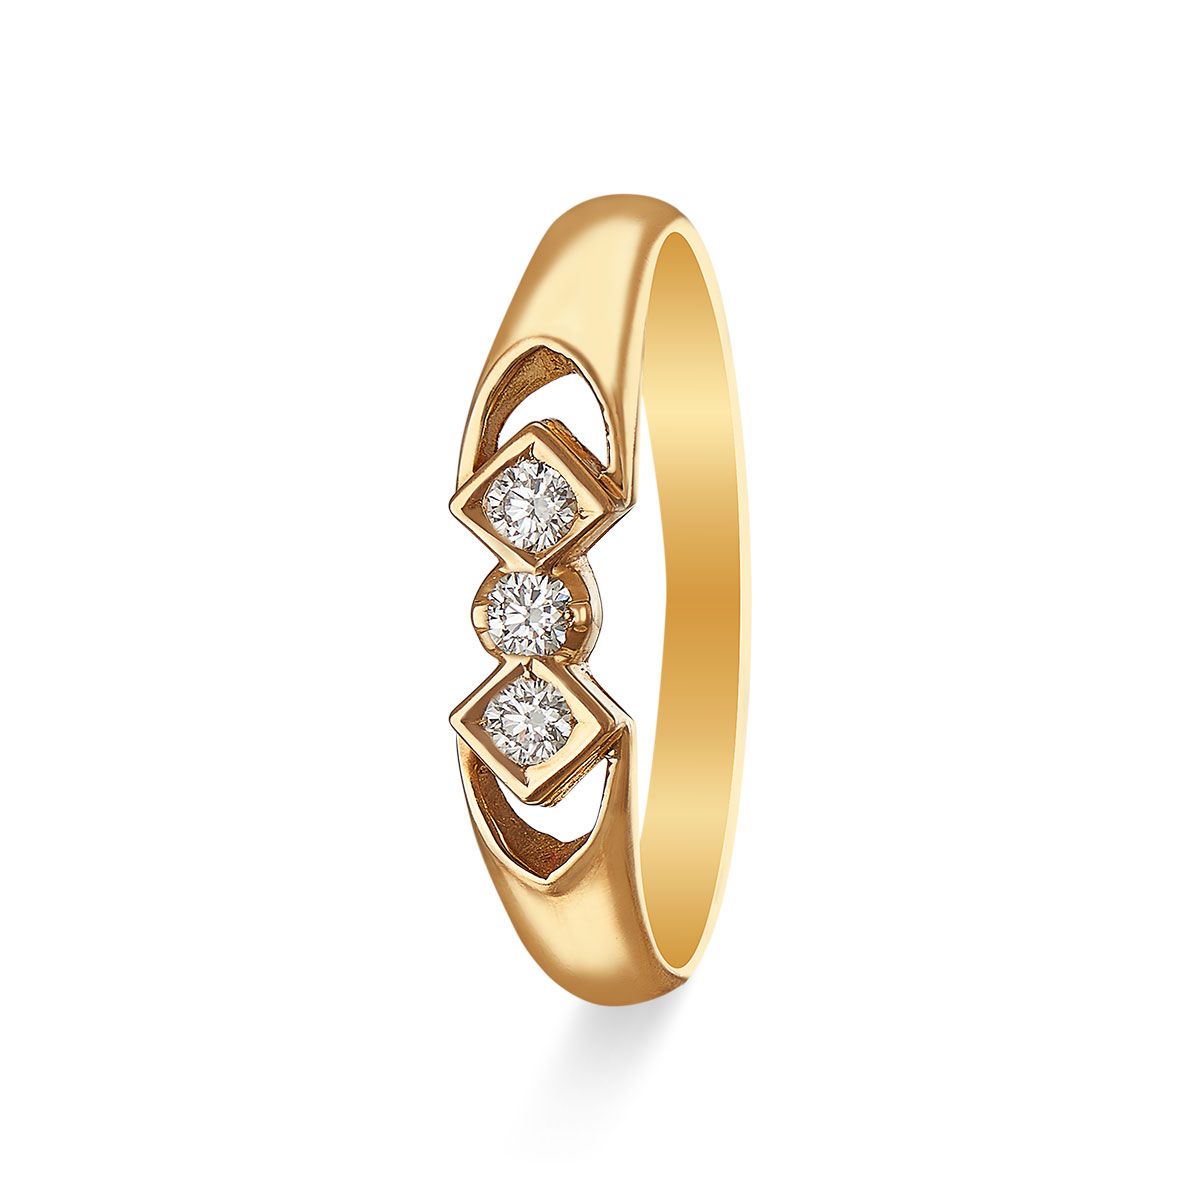 Buy Men's Gold Diamond Rings Online in India | Vai ra – Page 2 – Vai Ra